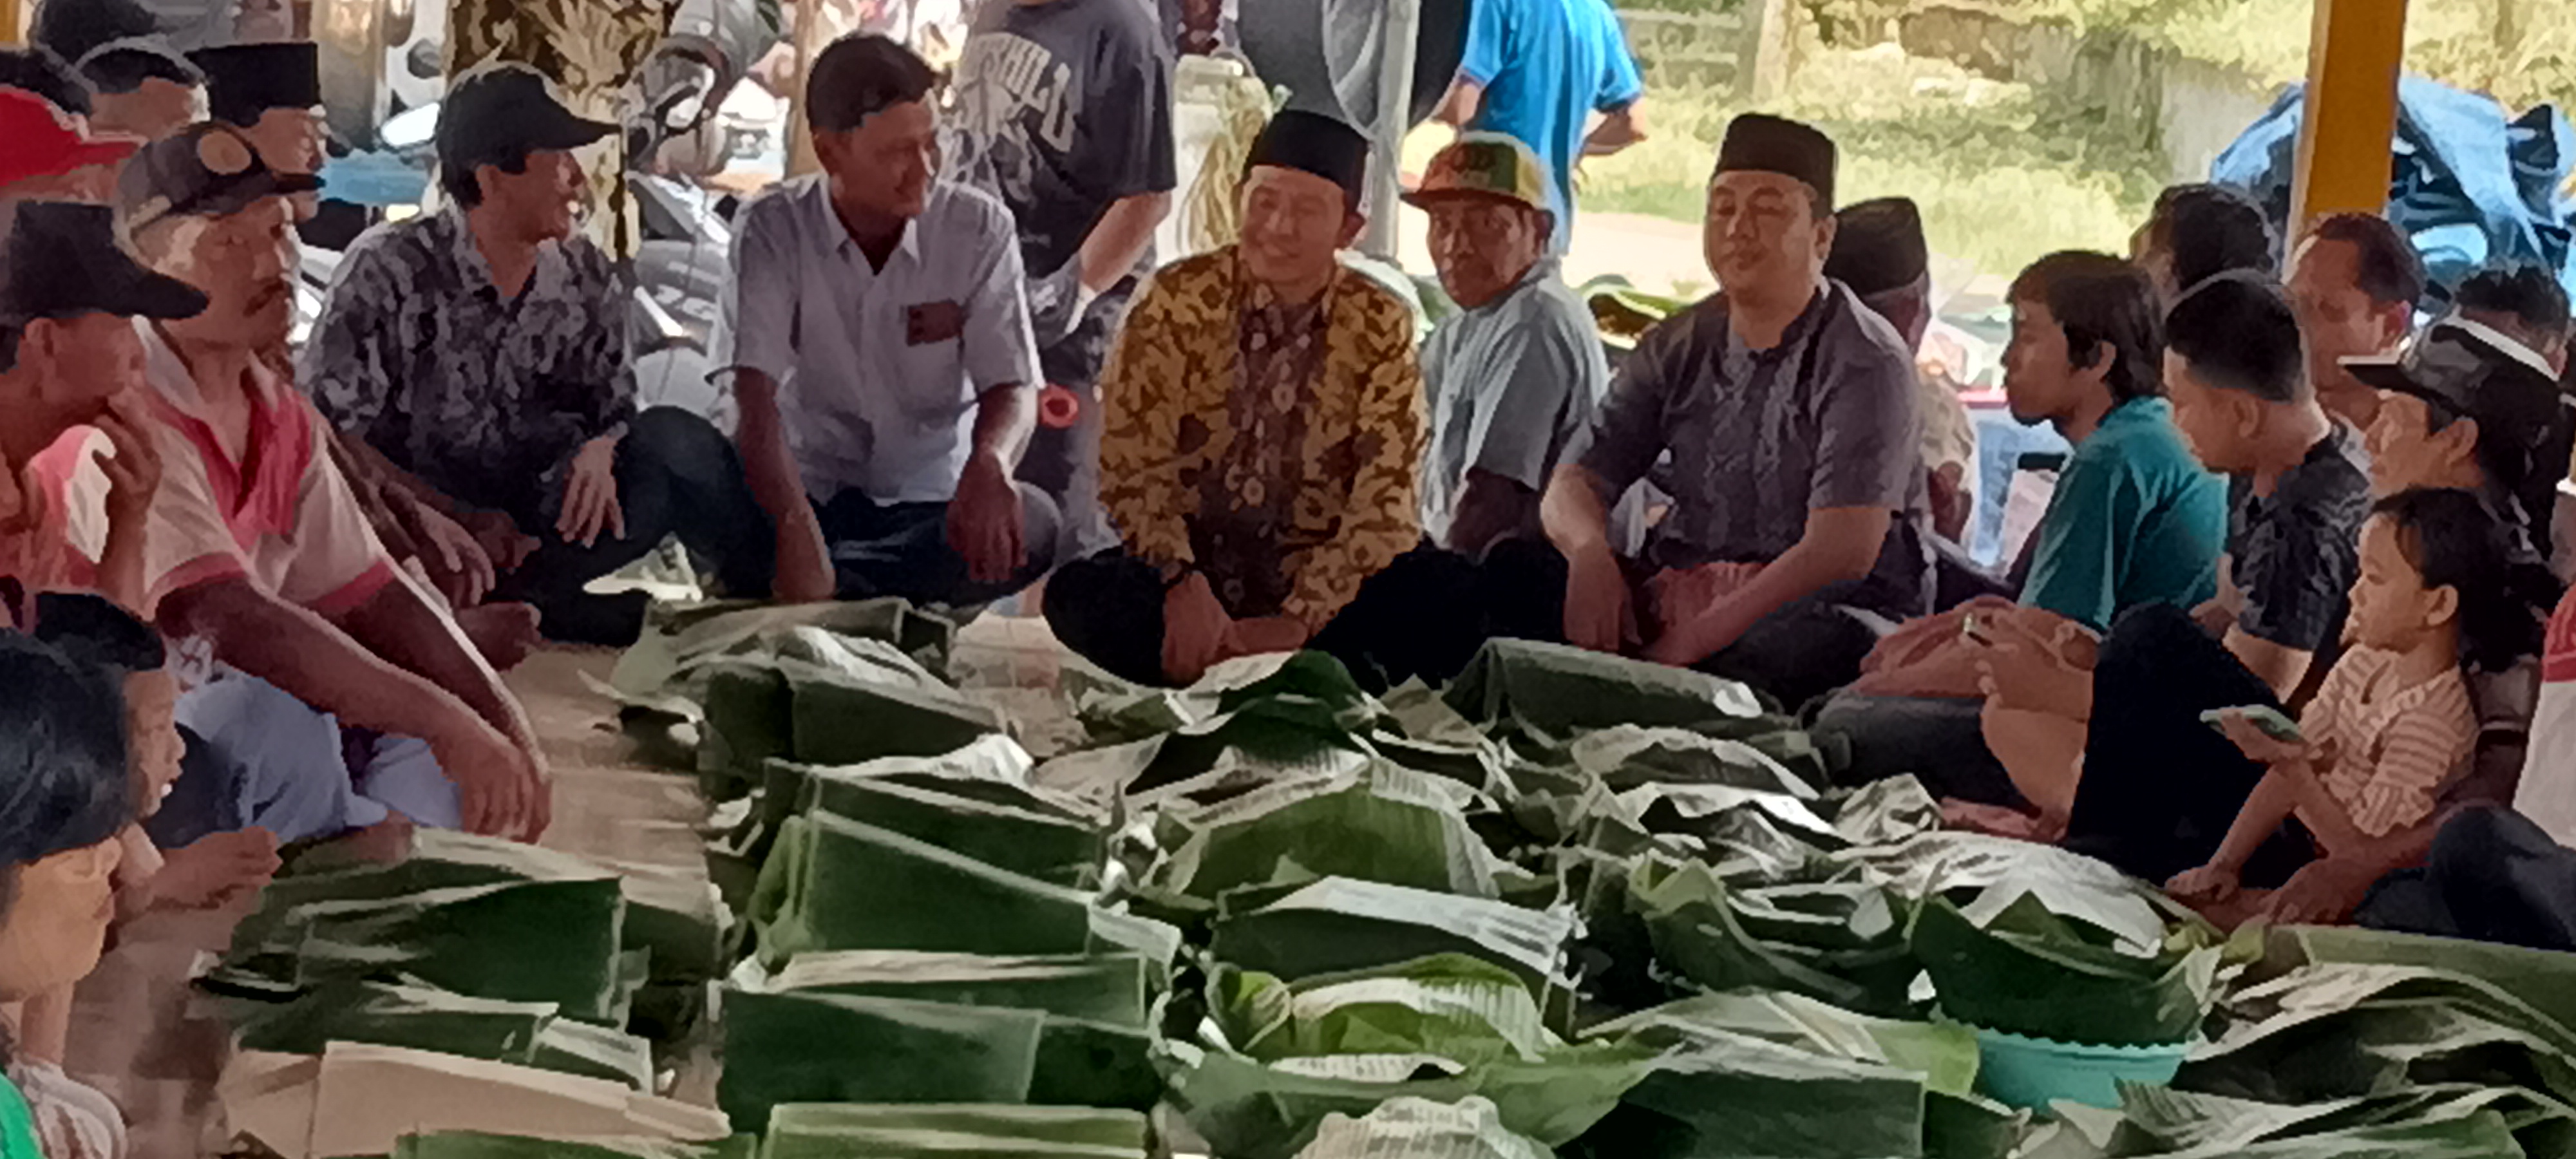 Acara Ruwat Desa Bakung Pringgodani yang diramaikan lebih dari 200 warga, dan dihadiri oleh anggota DPRD provinsi Jatim Adam Rusydi